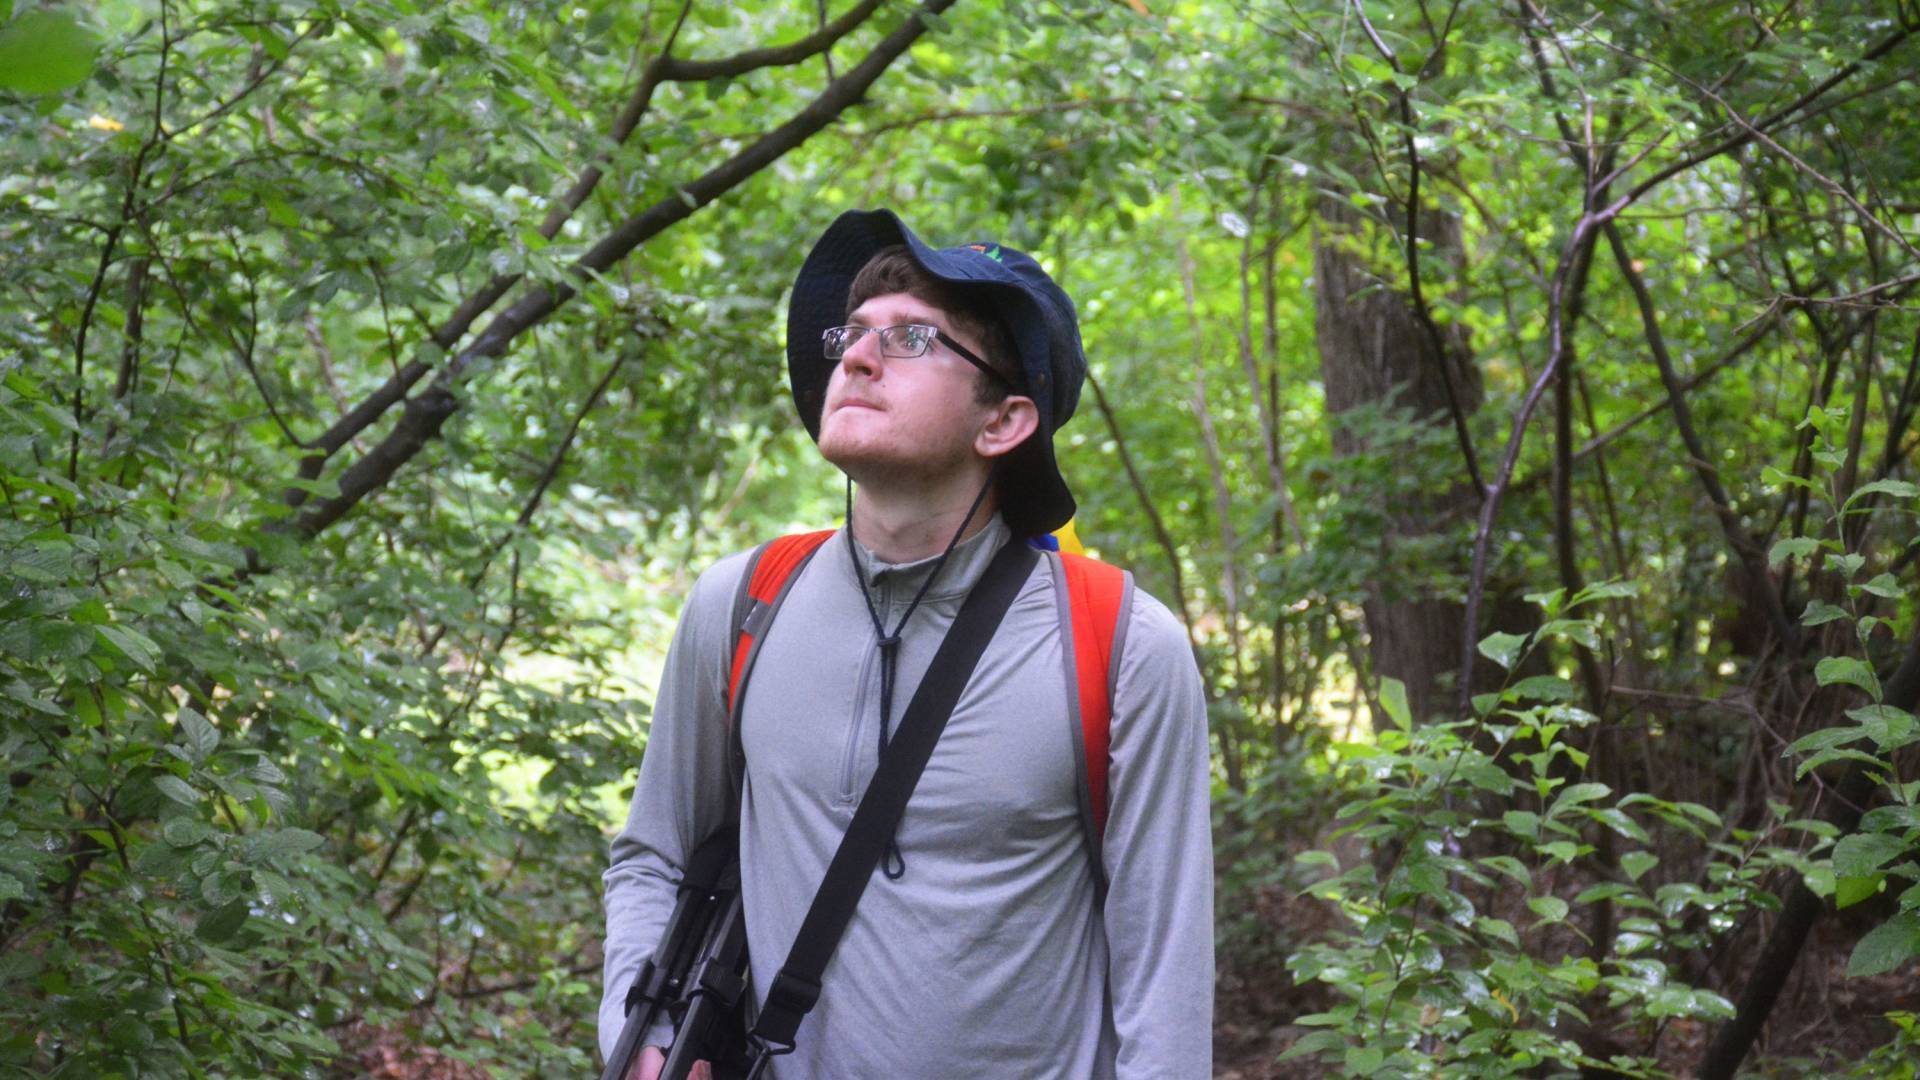 Joe Kawalec in a forest, carrying camera equipment